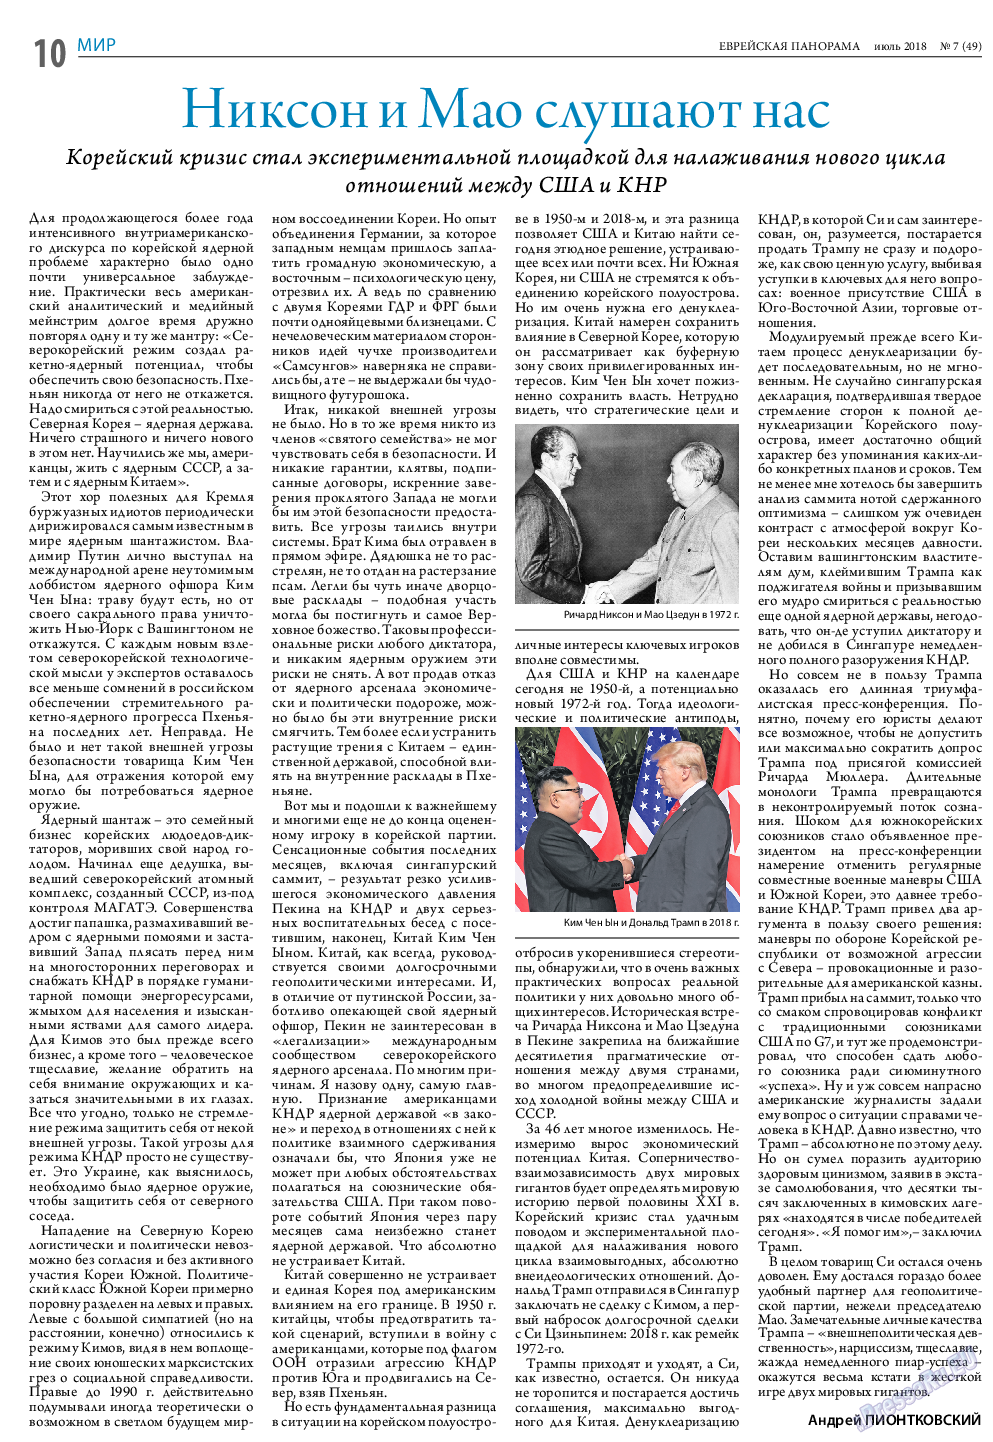 Еврейская панорама, газета. 2018 №7 стр.10